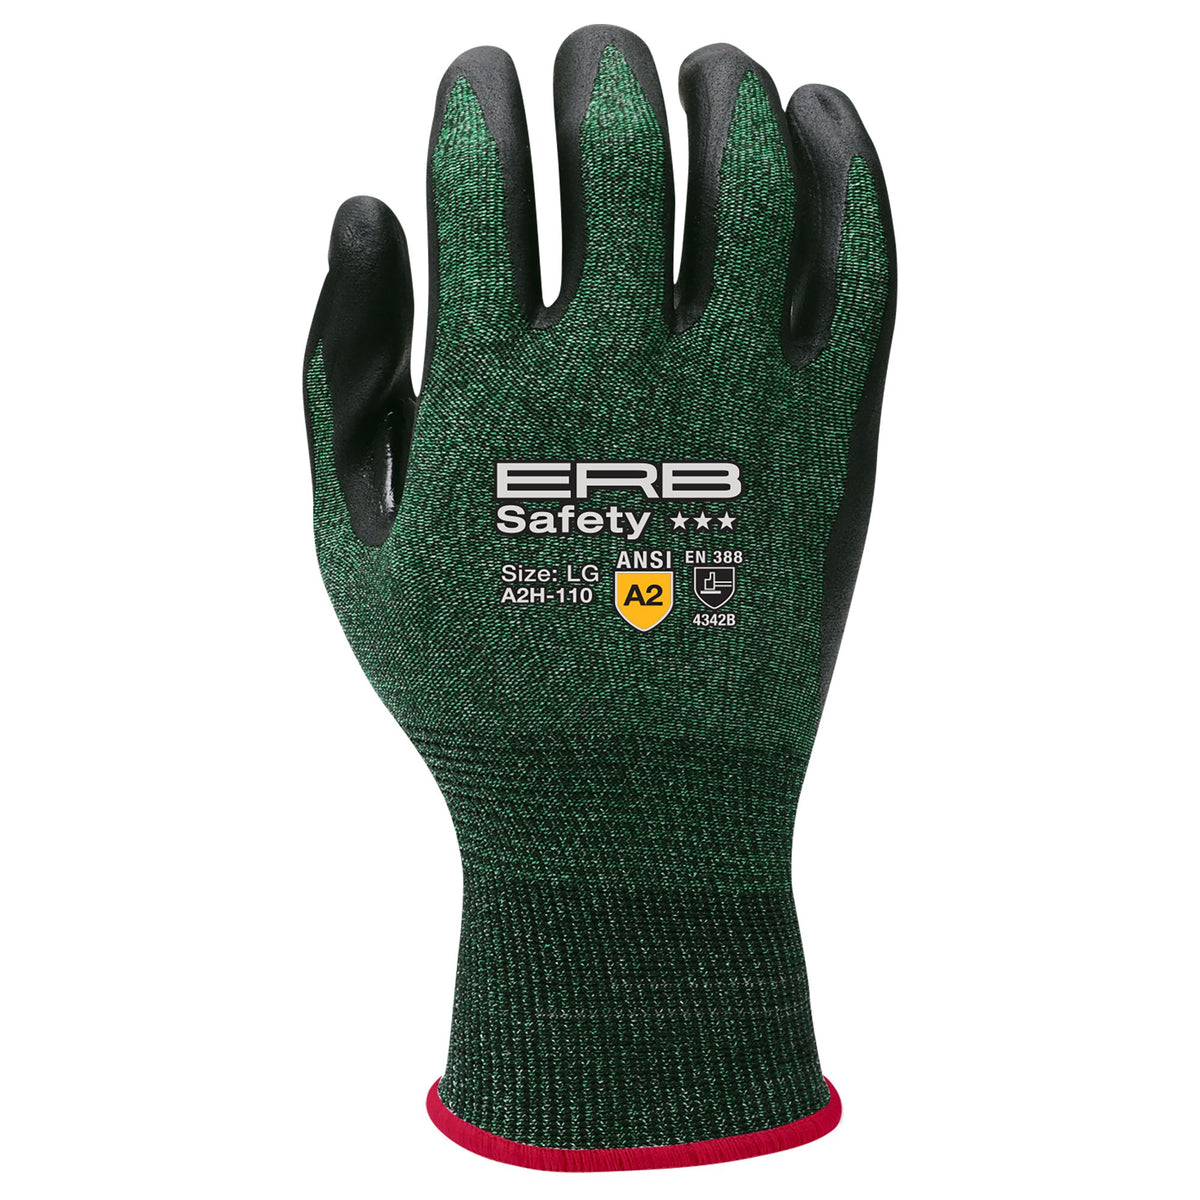 A2H-110 HPPE Cut Glove with Nitrile Micro-Foam Coating 12pair